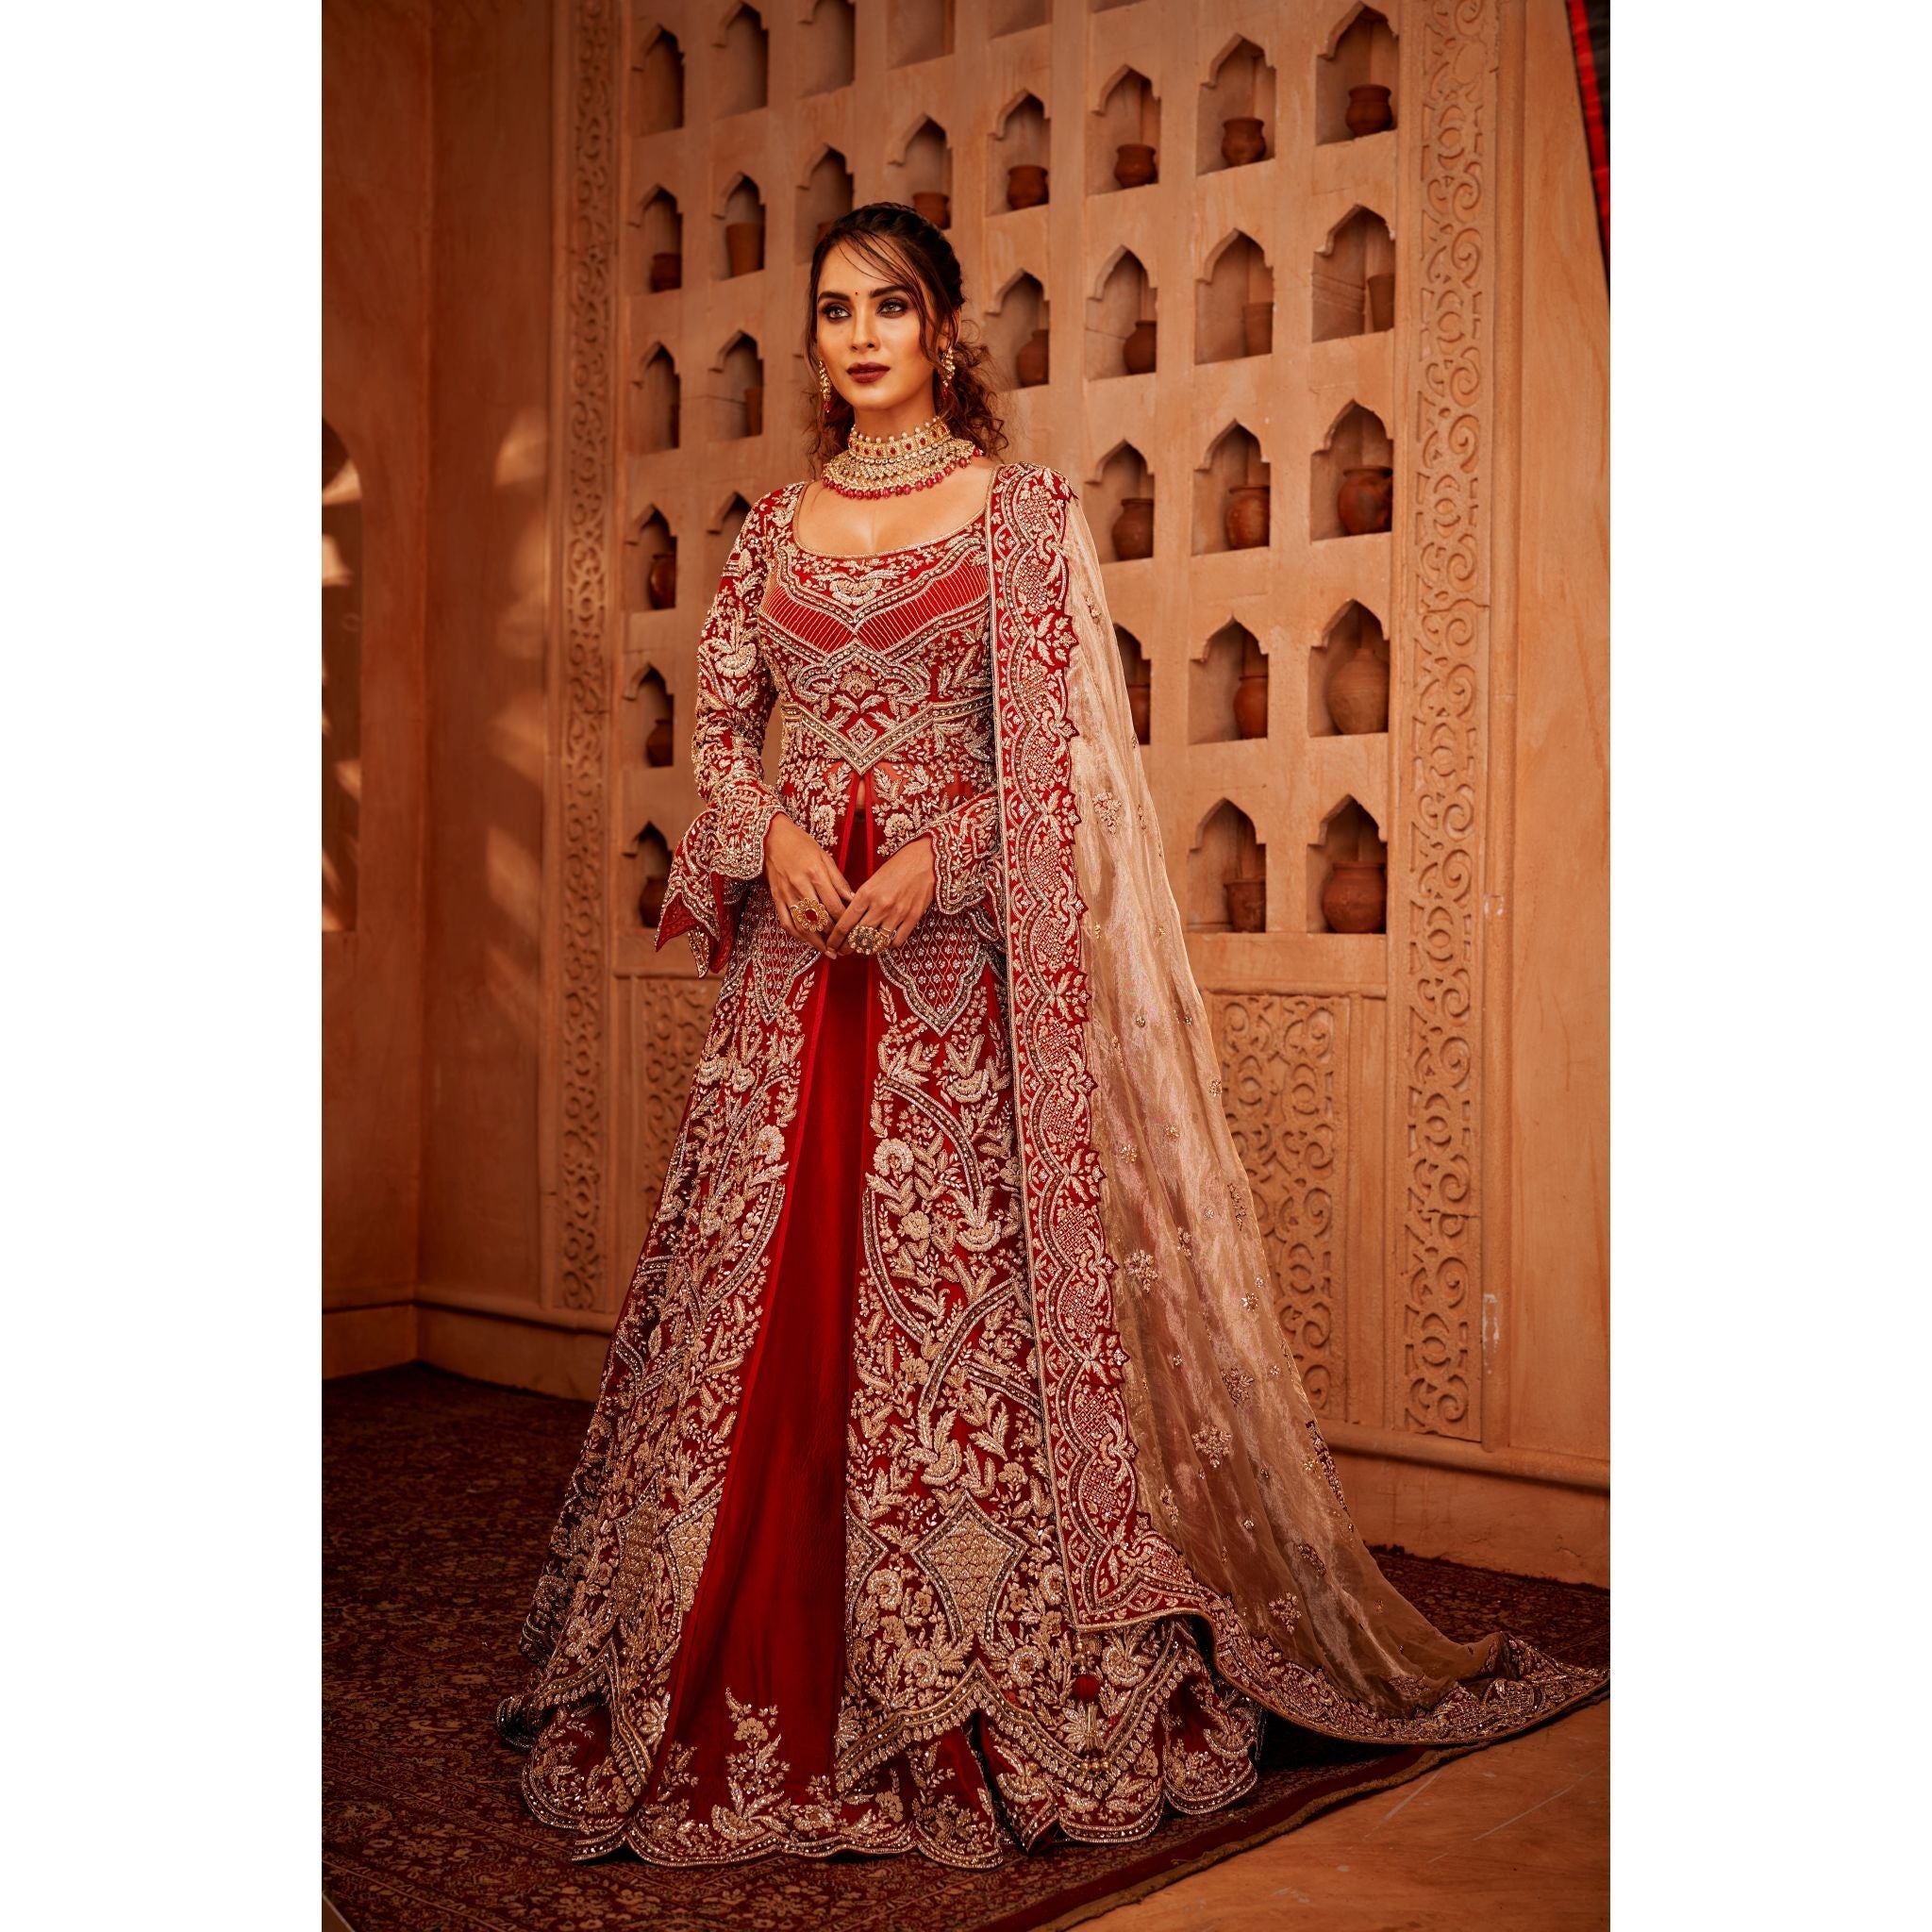 Deep Red And Gold Anarkali Lehenga - Indian Designer Bridal Wedding Outfit